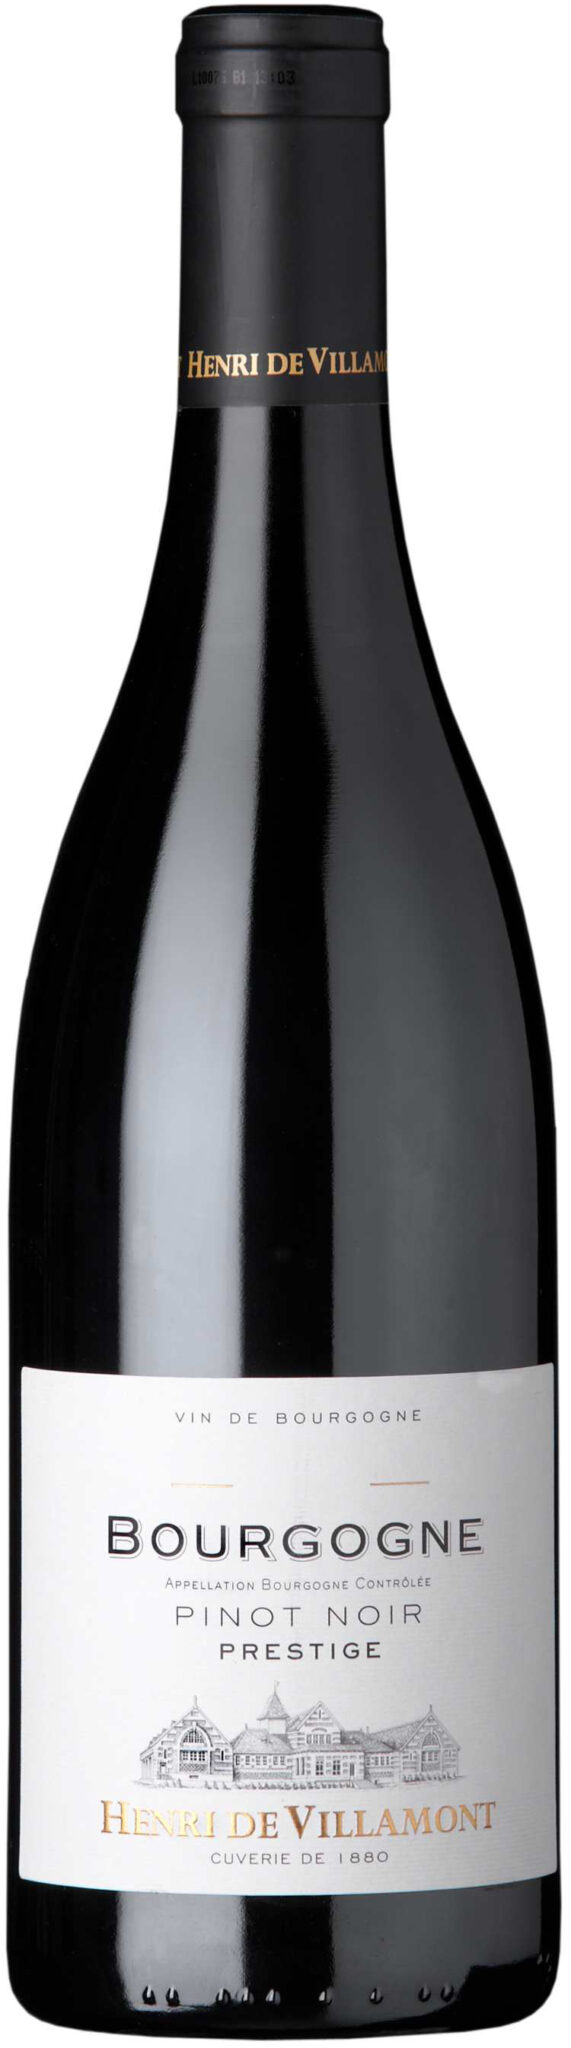 Henri de Villamont Prestige, Pinot Noir Bourgogne AOC